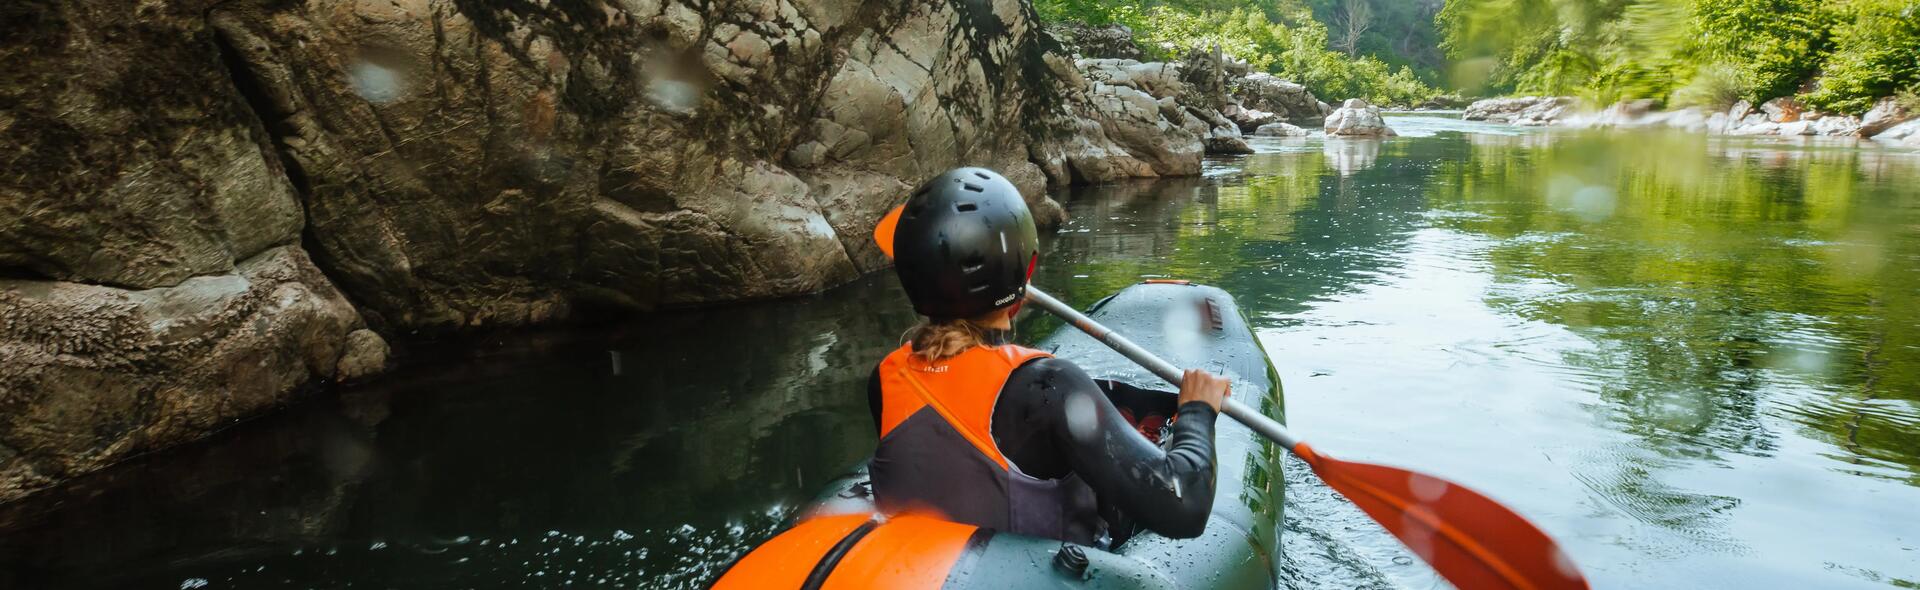 kayak de mer ou riviere